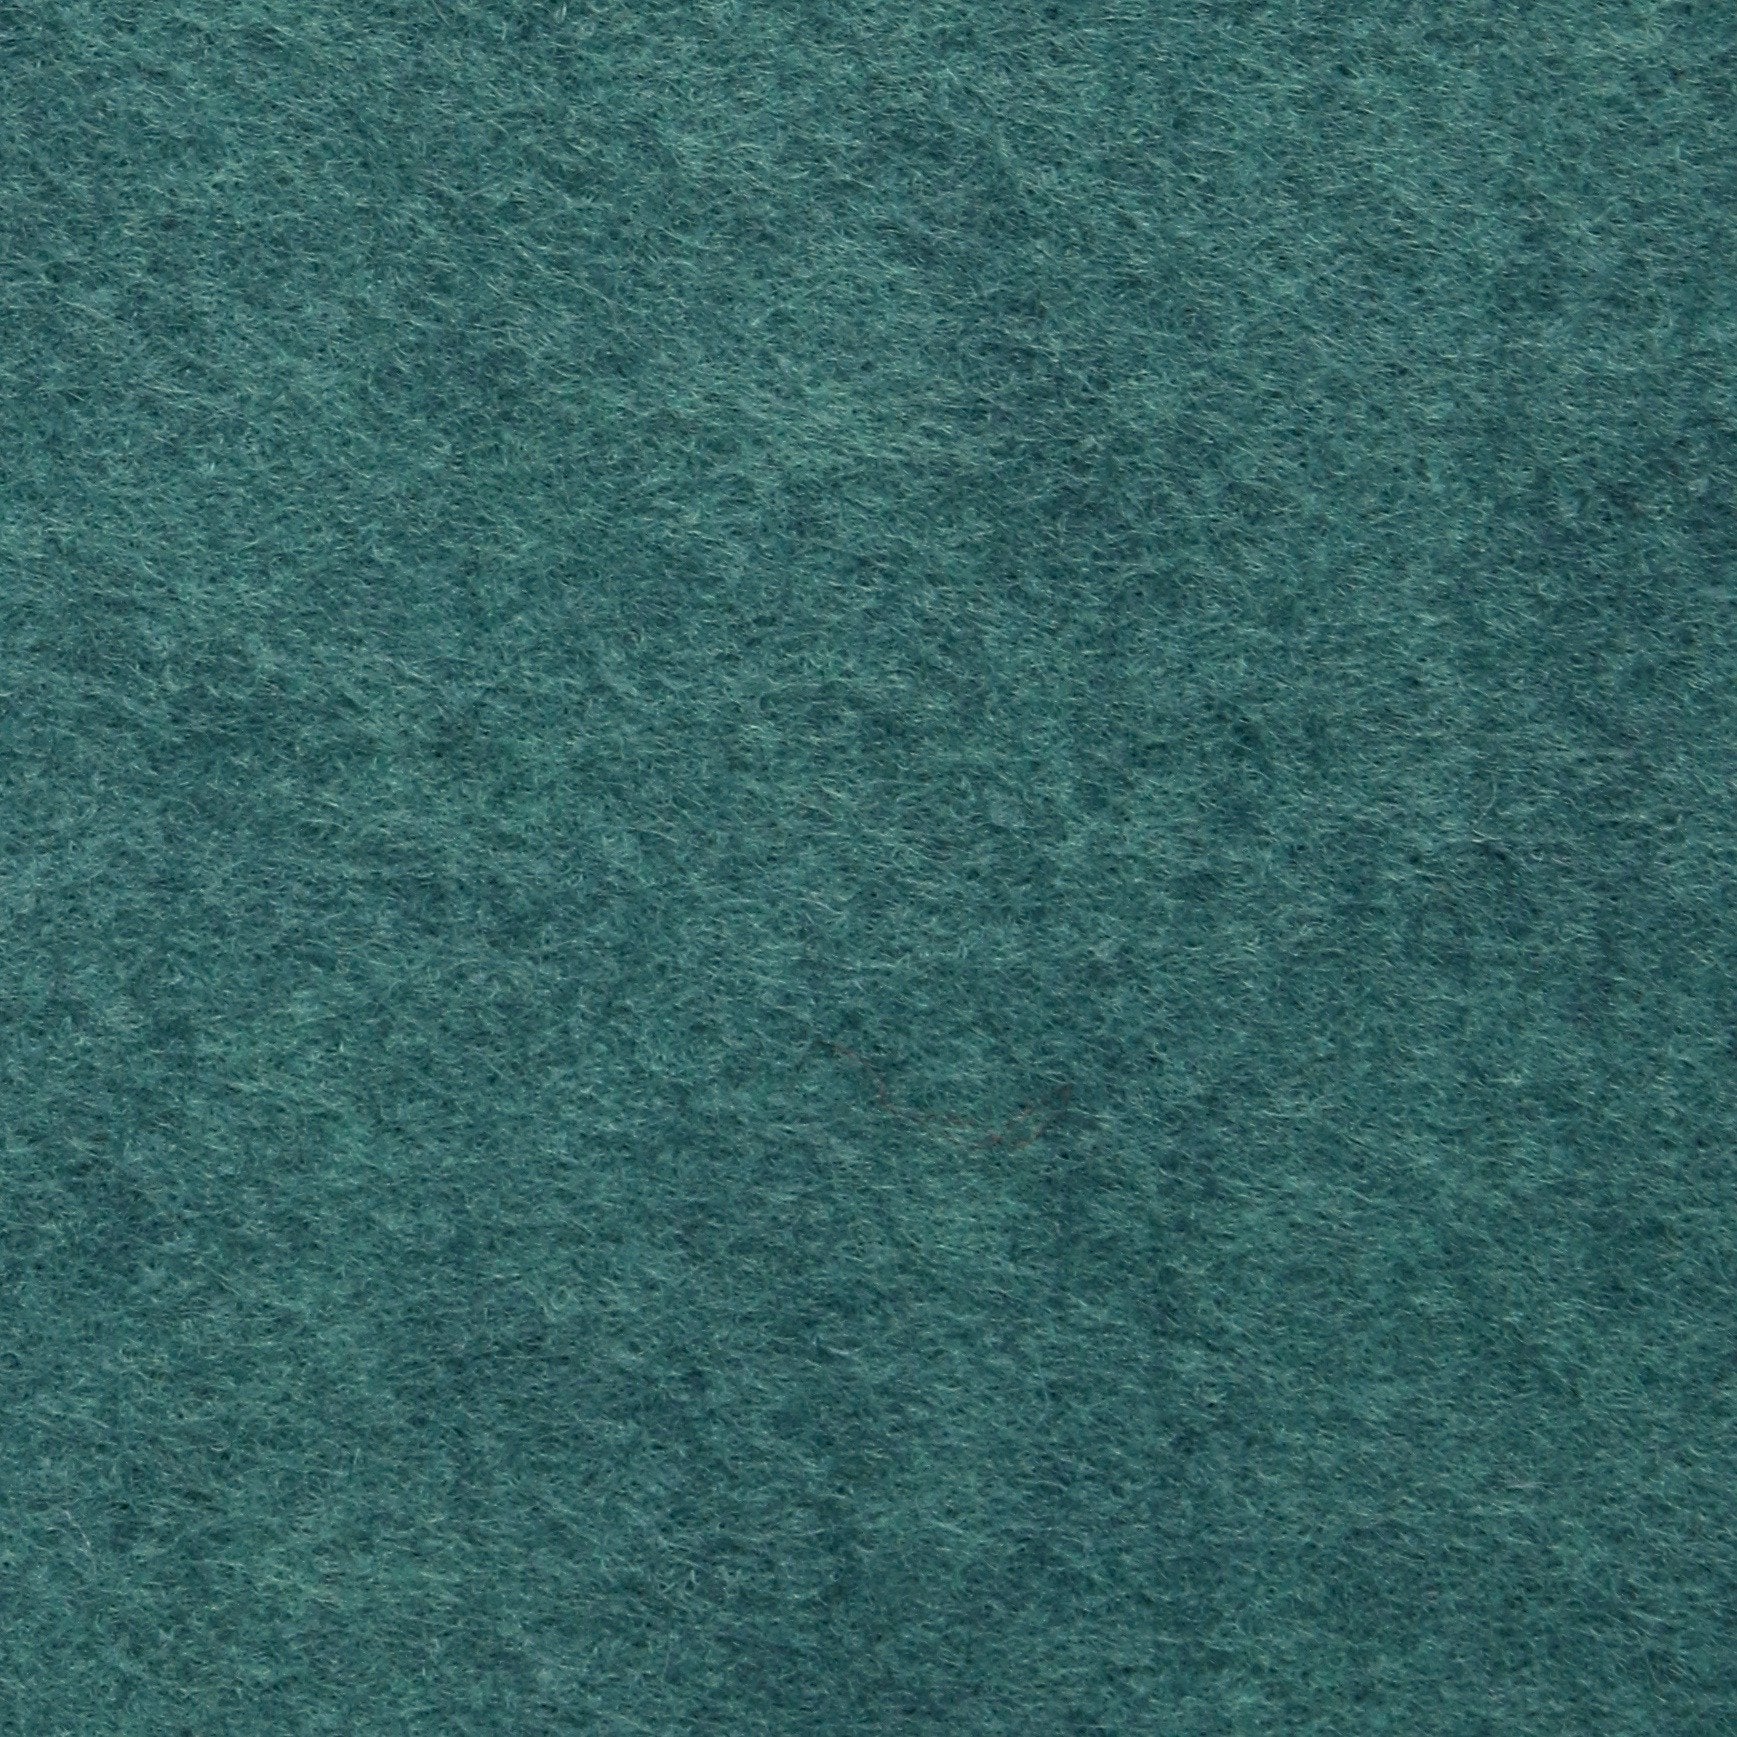 15 Greens 9X12 Merino Wool Blend Felt Sheets Collection - OTR felt